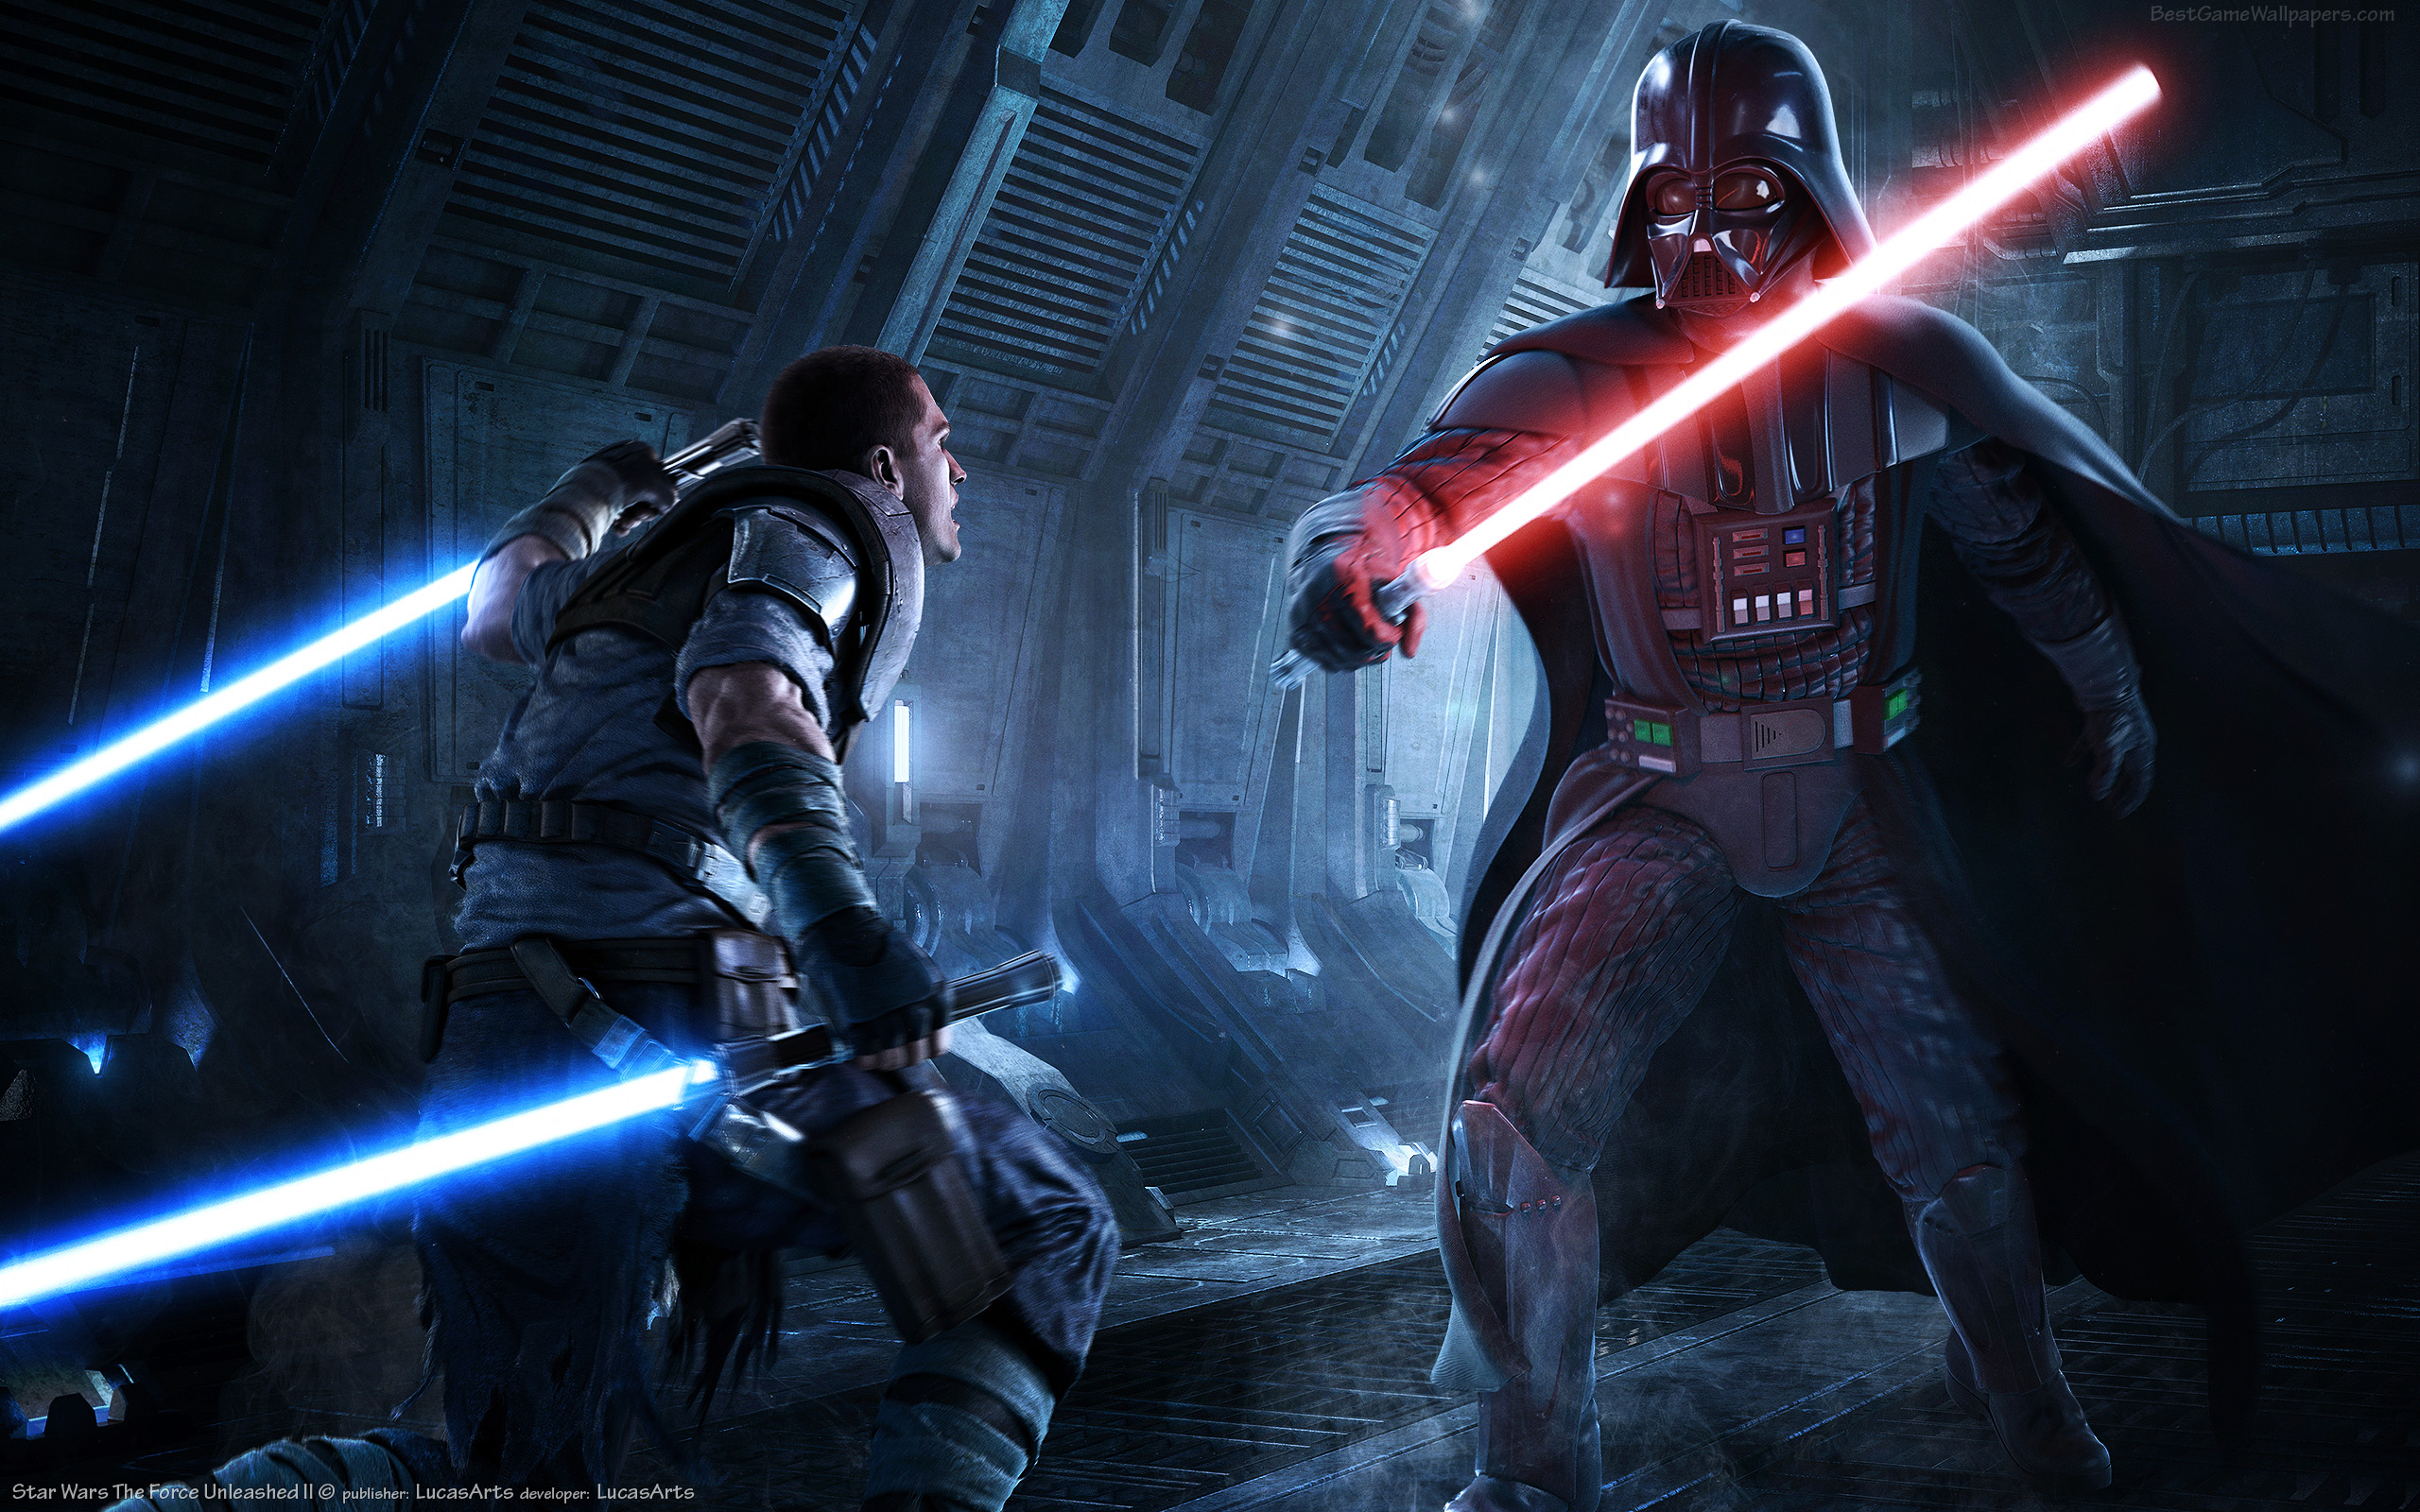 Star Wars: The Force Unleashed II HD wallpapers, Desktop wallpaper - most viewed